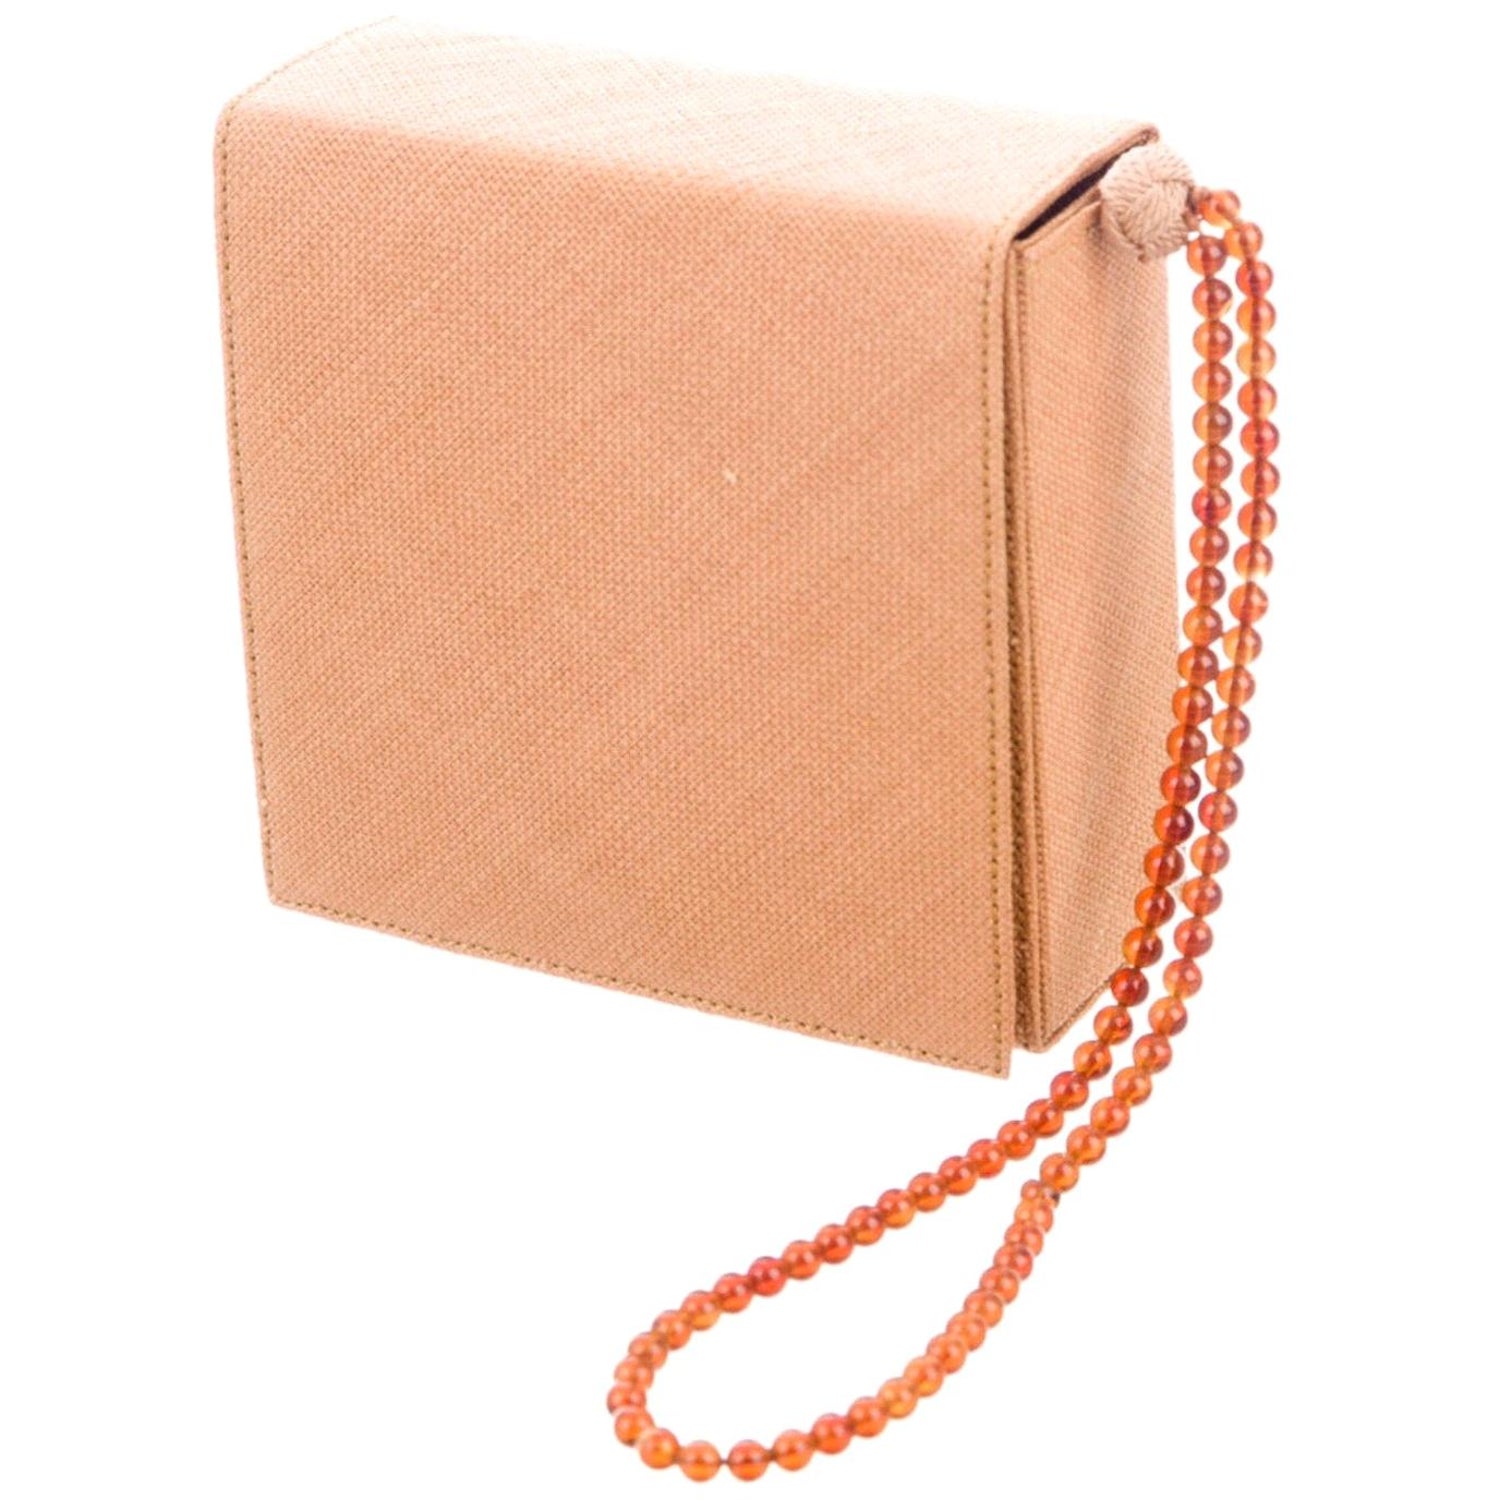 Christian Louboutin Paloma Clutch Spike Stud Chain Bag Light Pink 2 Way